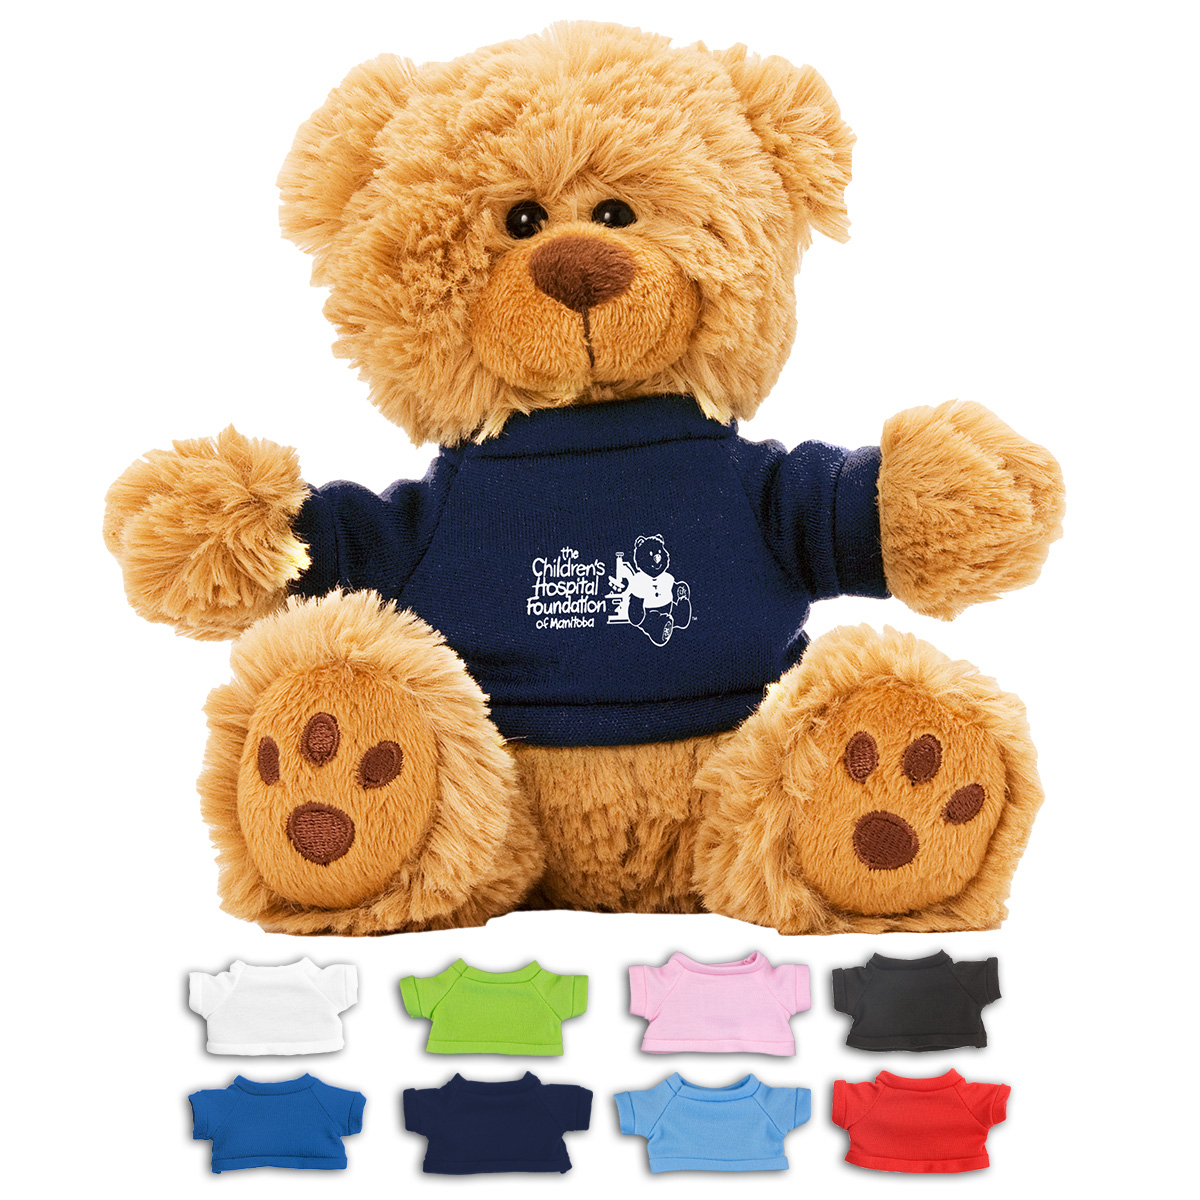 “Ted T. Bear” 6” Plush Teddy Bear With Choice of T-Shirt Color